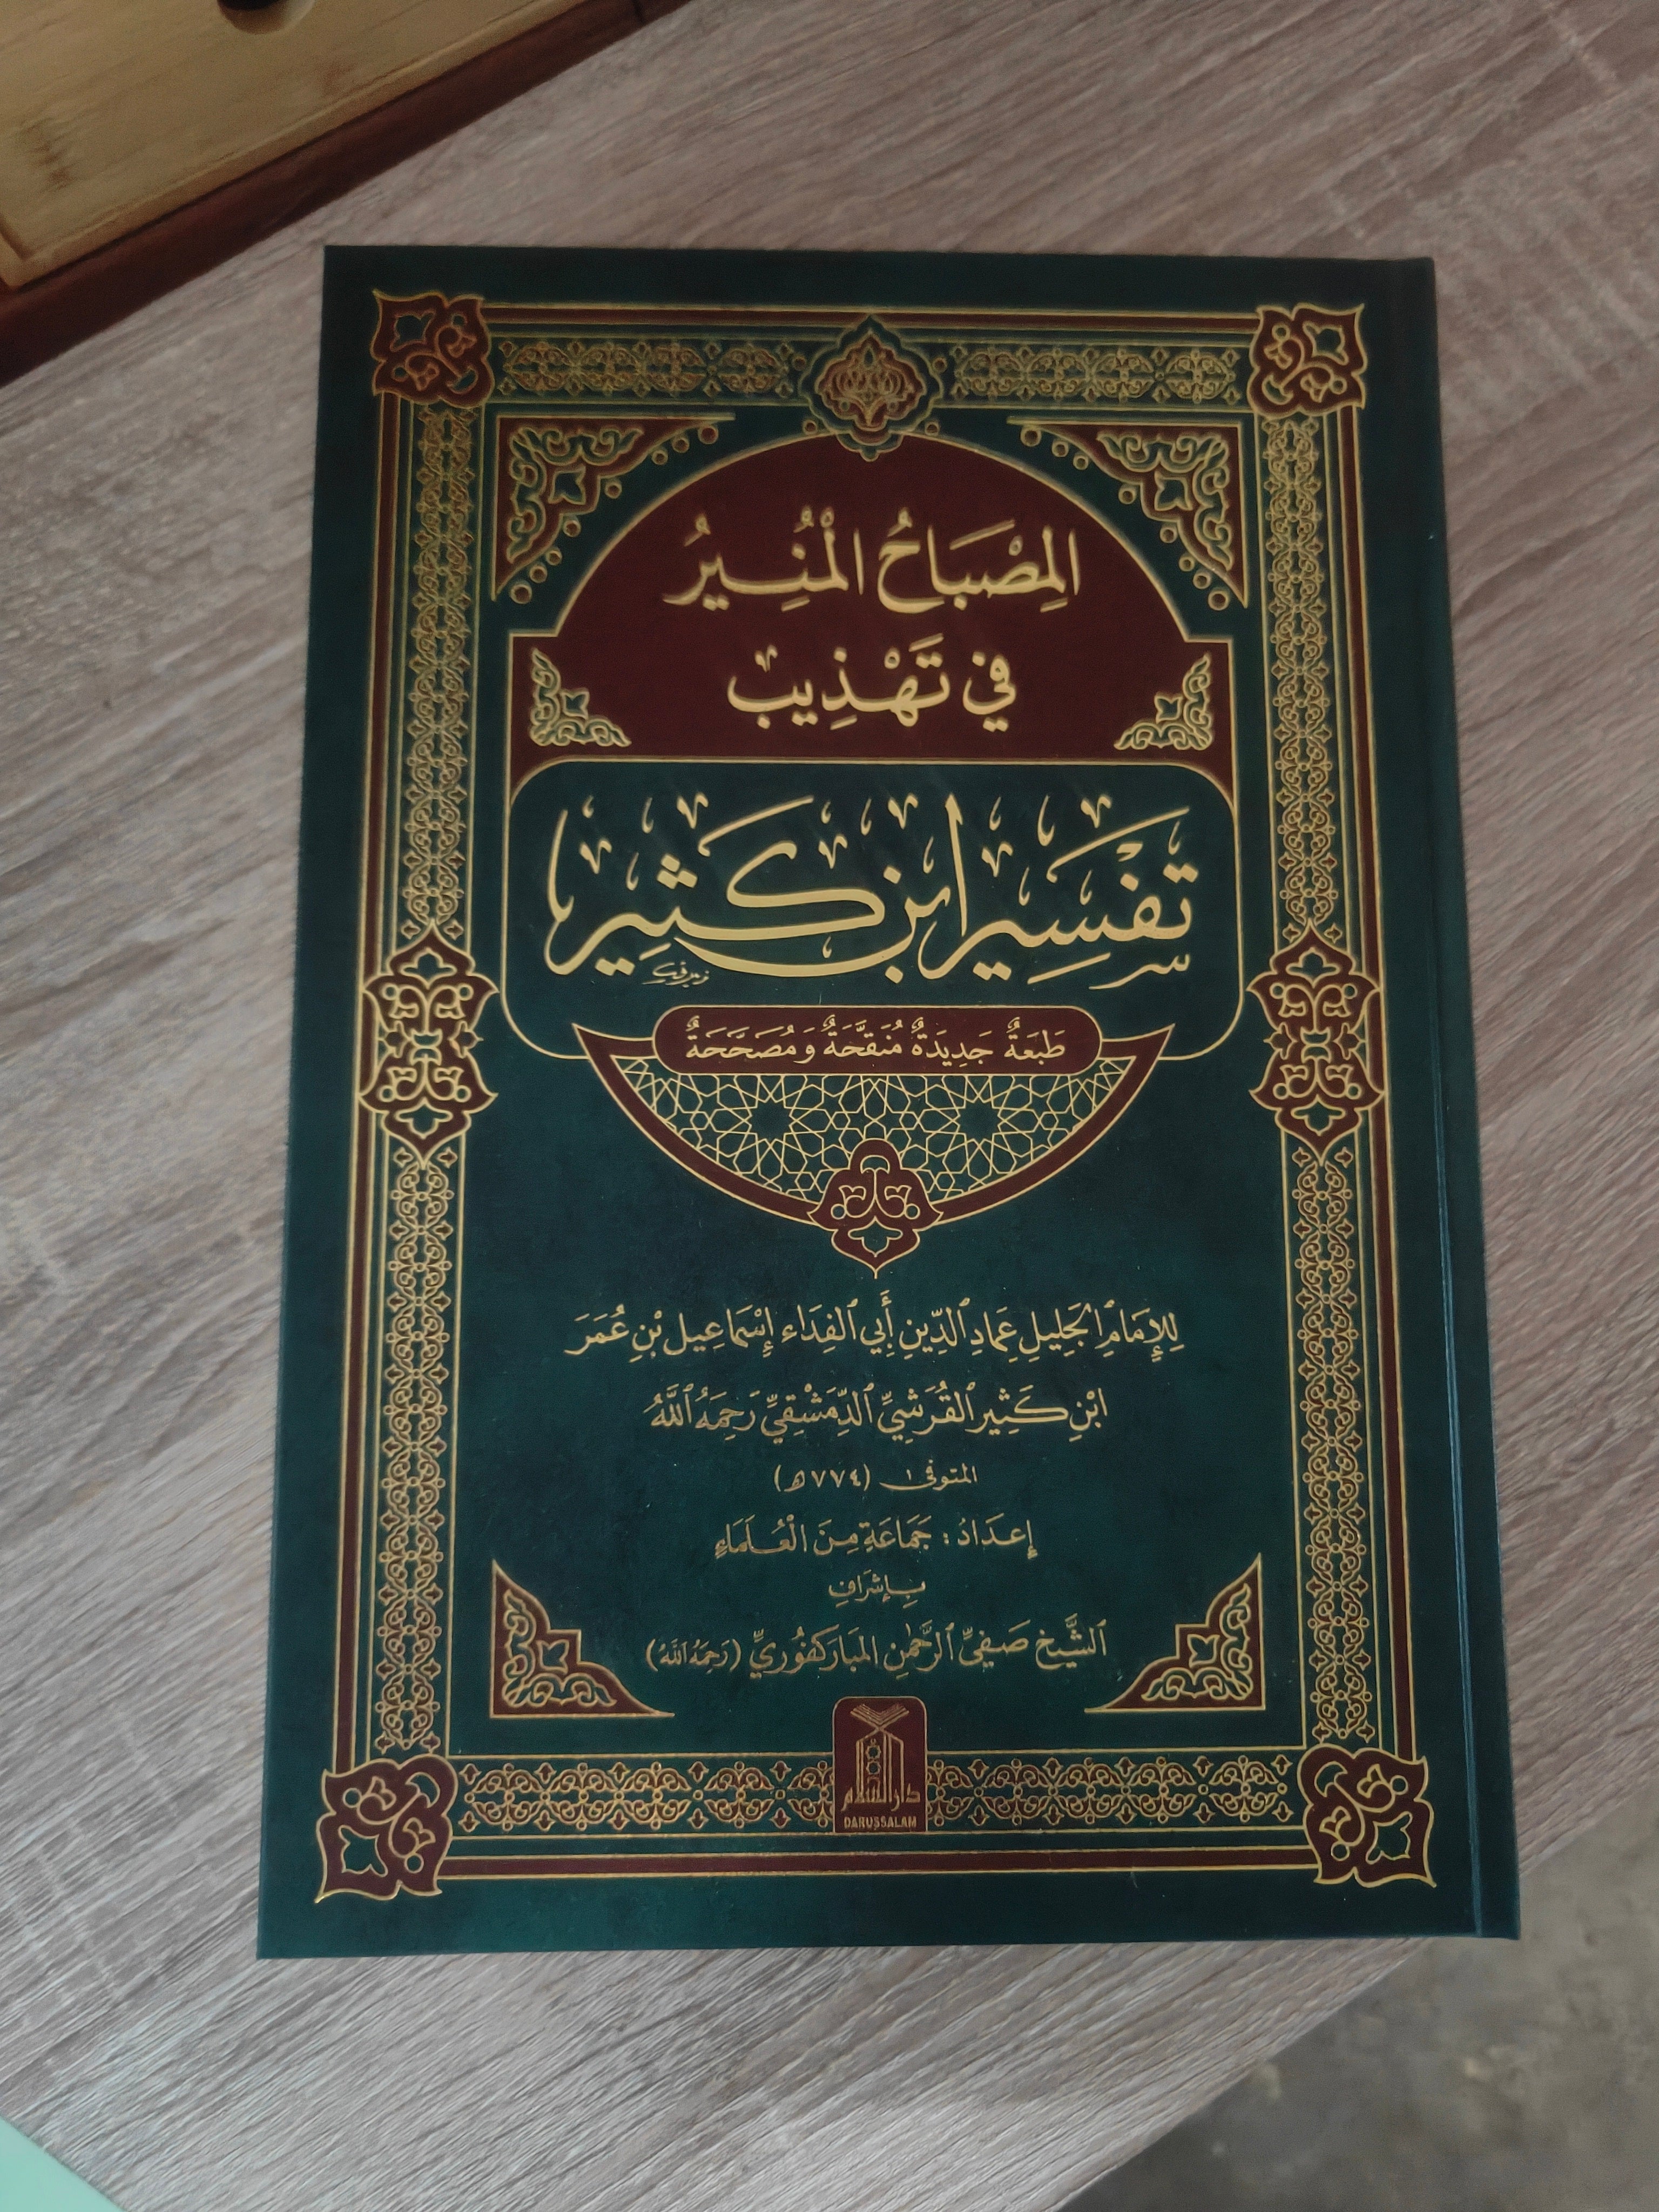 Summarised Tafsir Ibn Kathir in Arabic( أوجز التفاسير من تفسير ابن كثير )